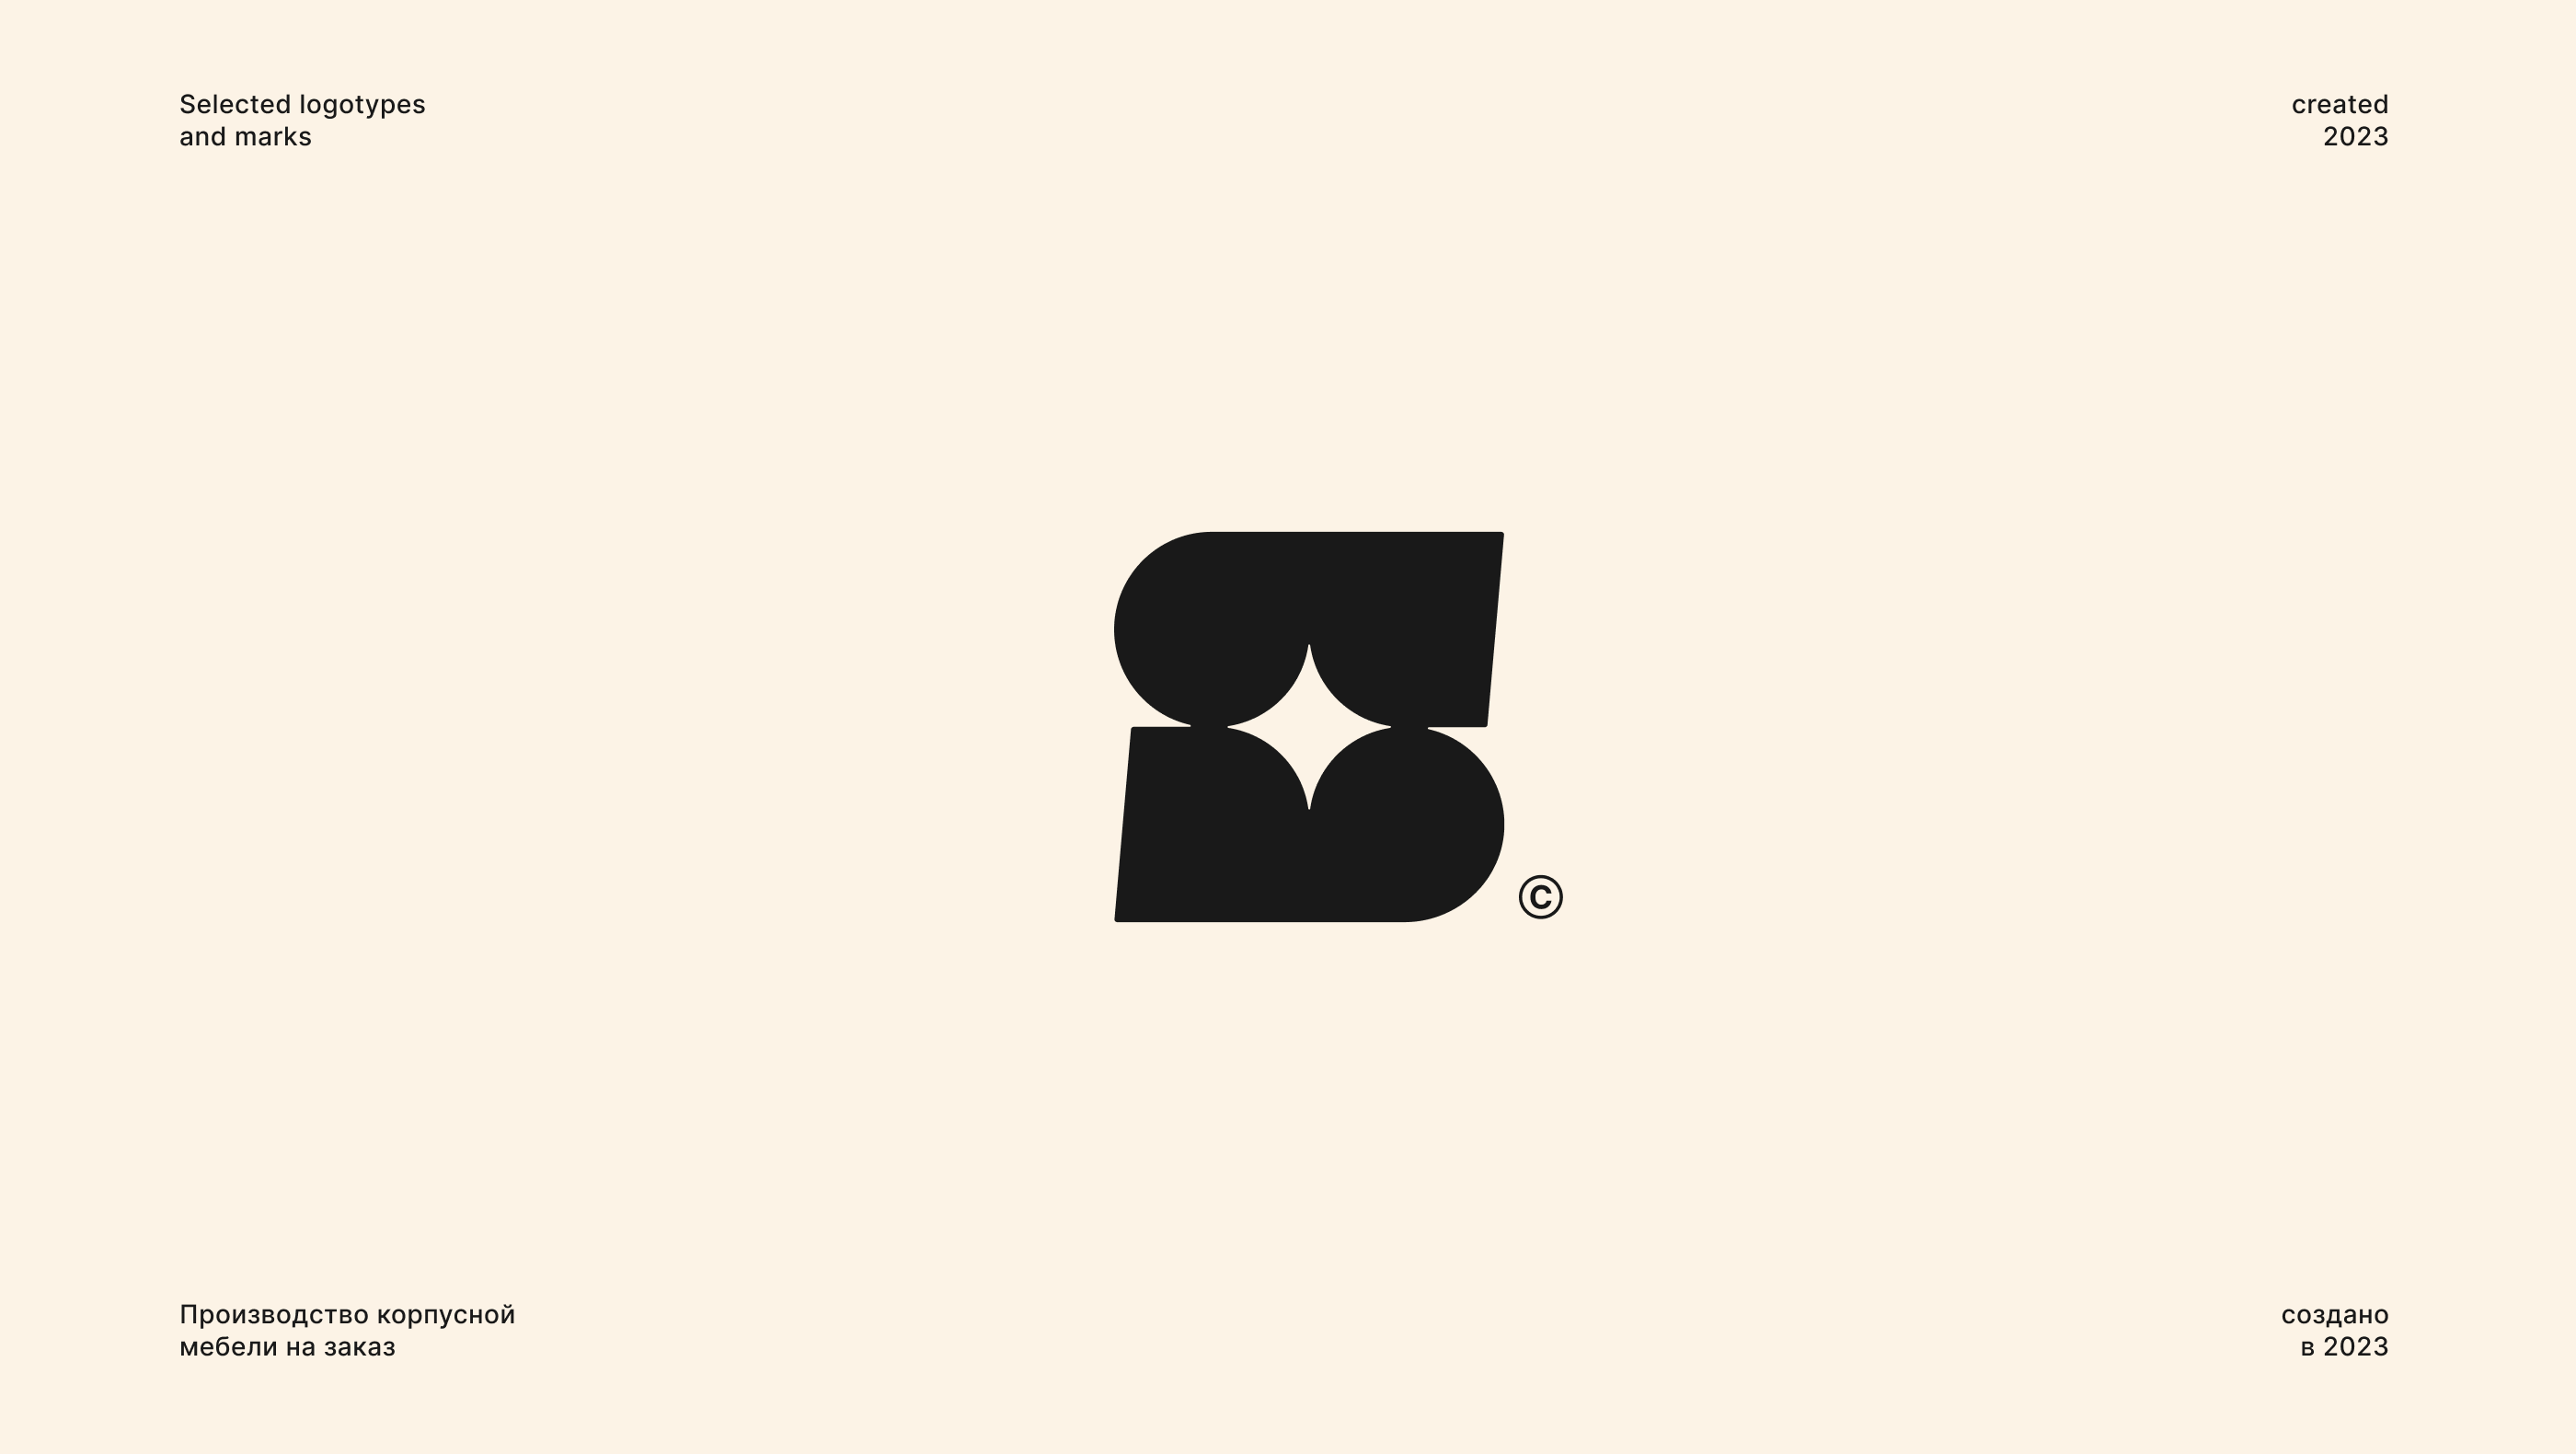 Collection of logos and marks 2023 — Изображение №6 — Брендинг, Графика на Dprofile